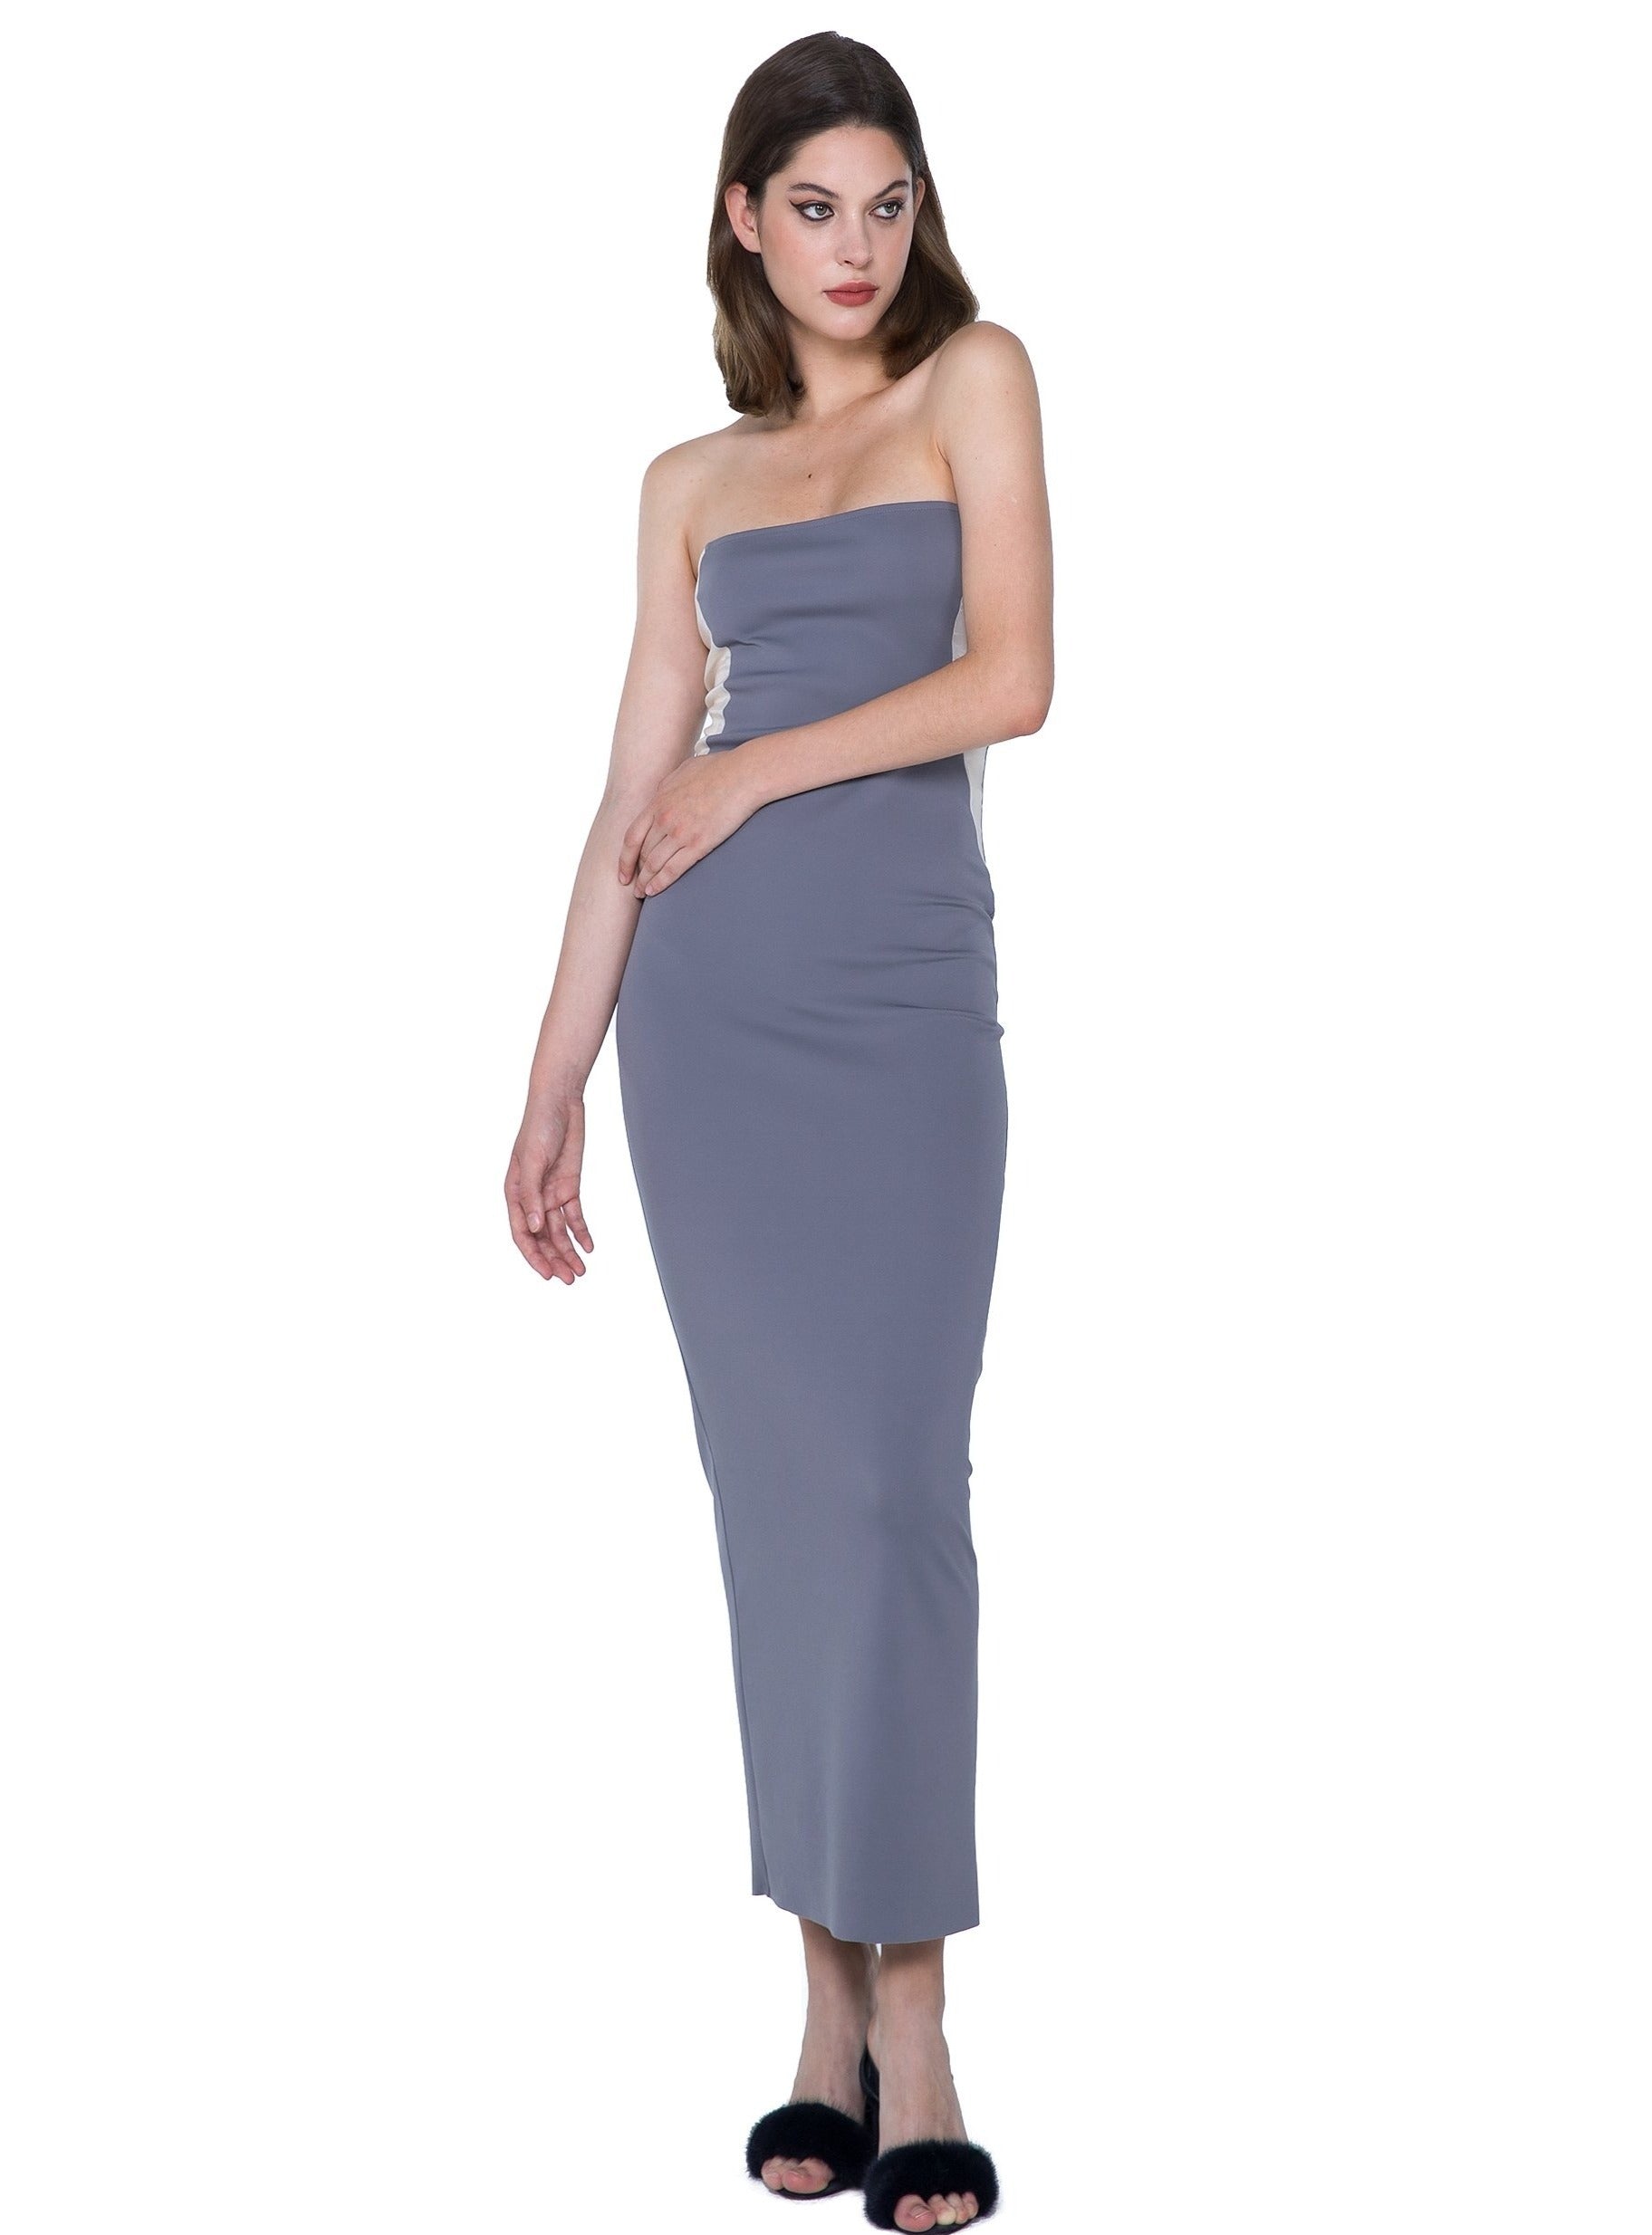 CSFC(C) AW20 Adjustable Length Tube Dress